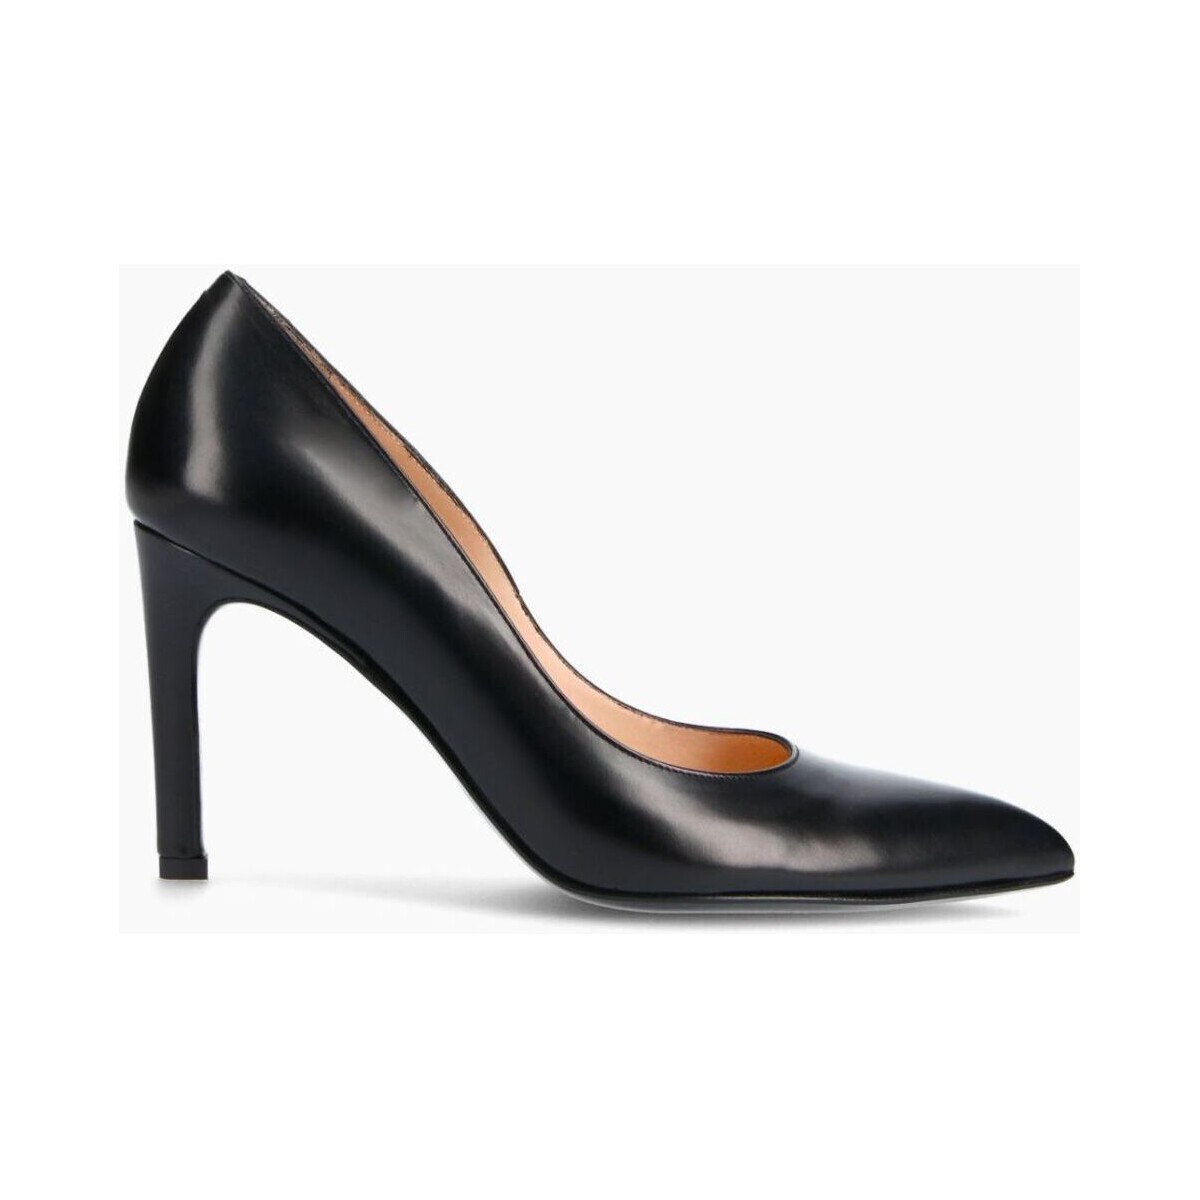 Chaussures Femme Escarpins Freelance Forel 70 Noir